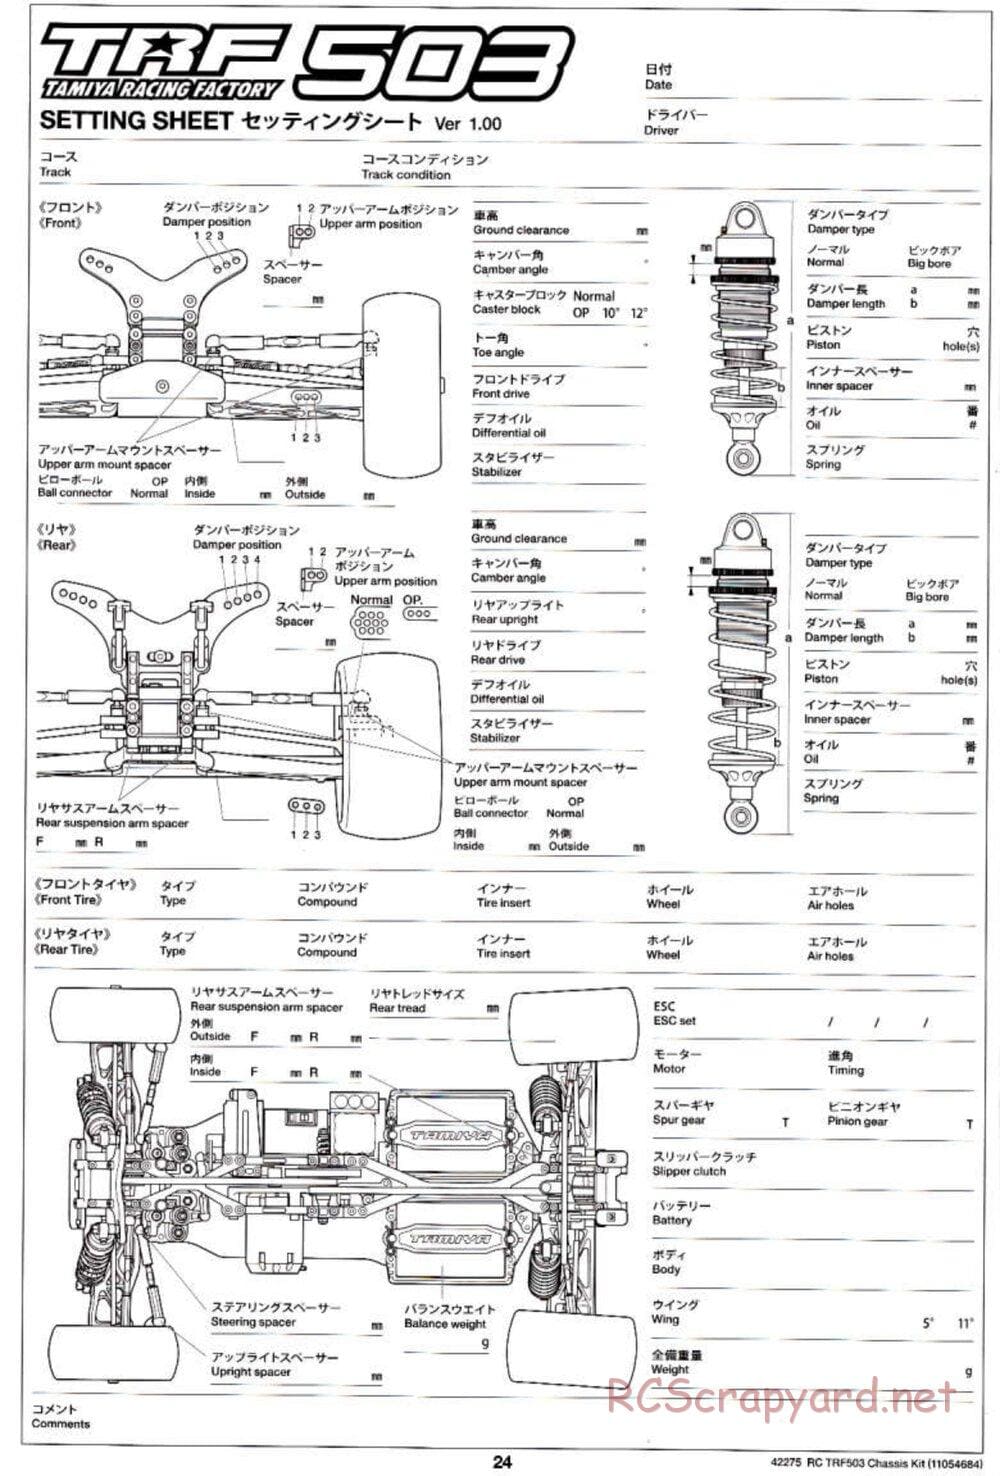 Tamiya - TRF503 Chassis - Manual - Page 24